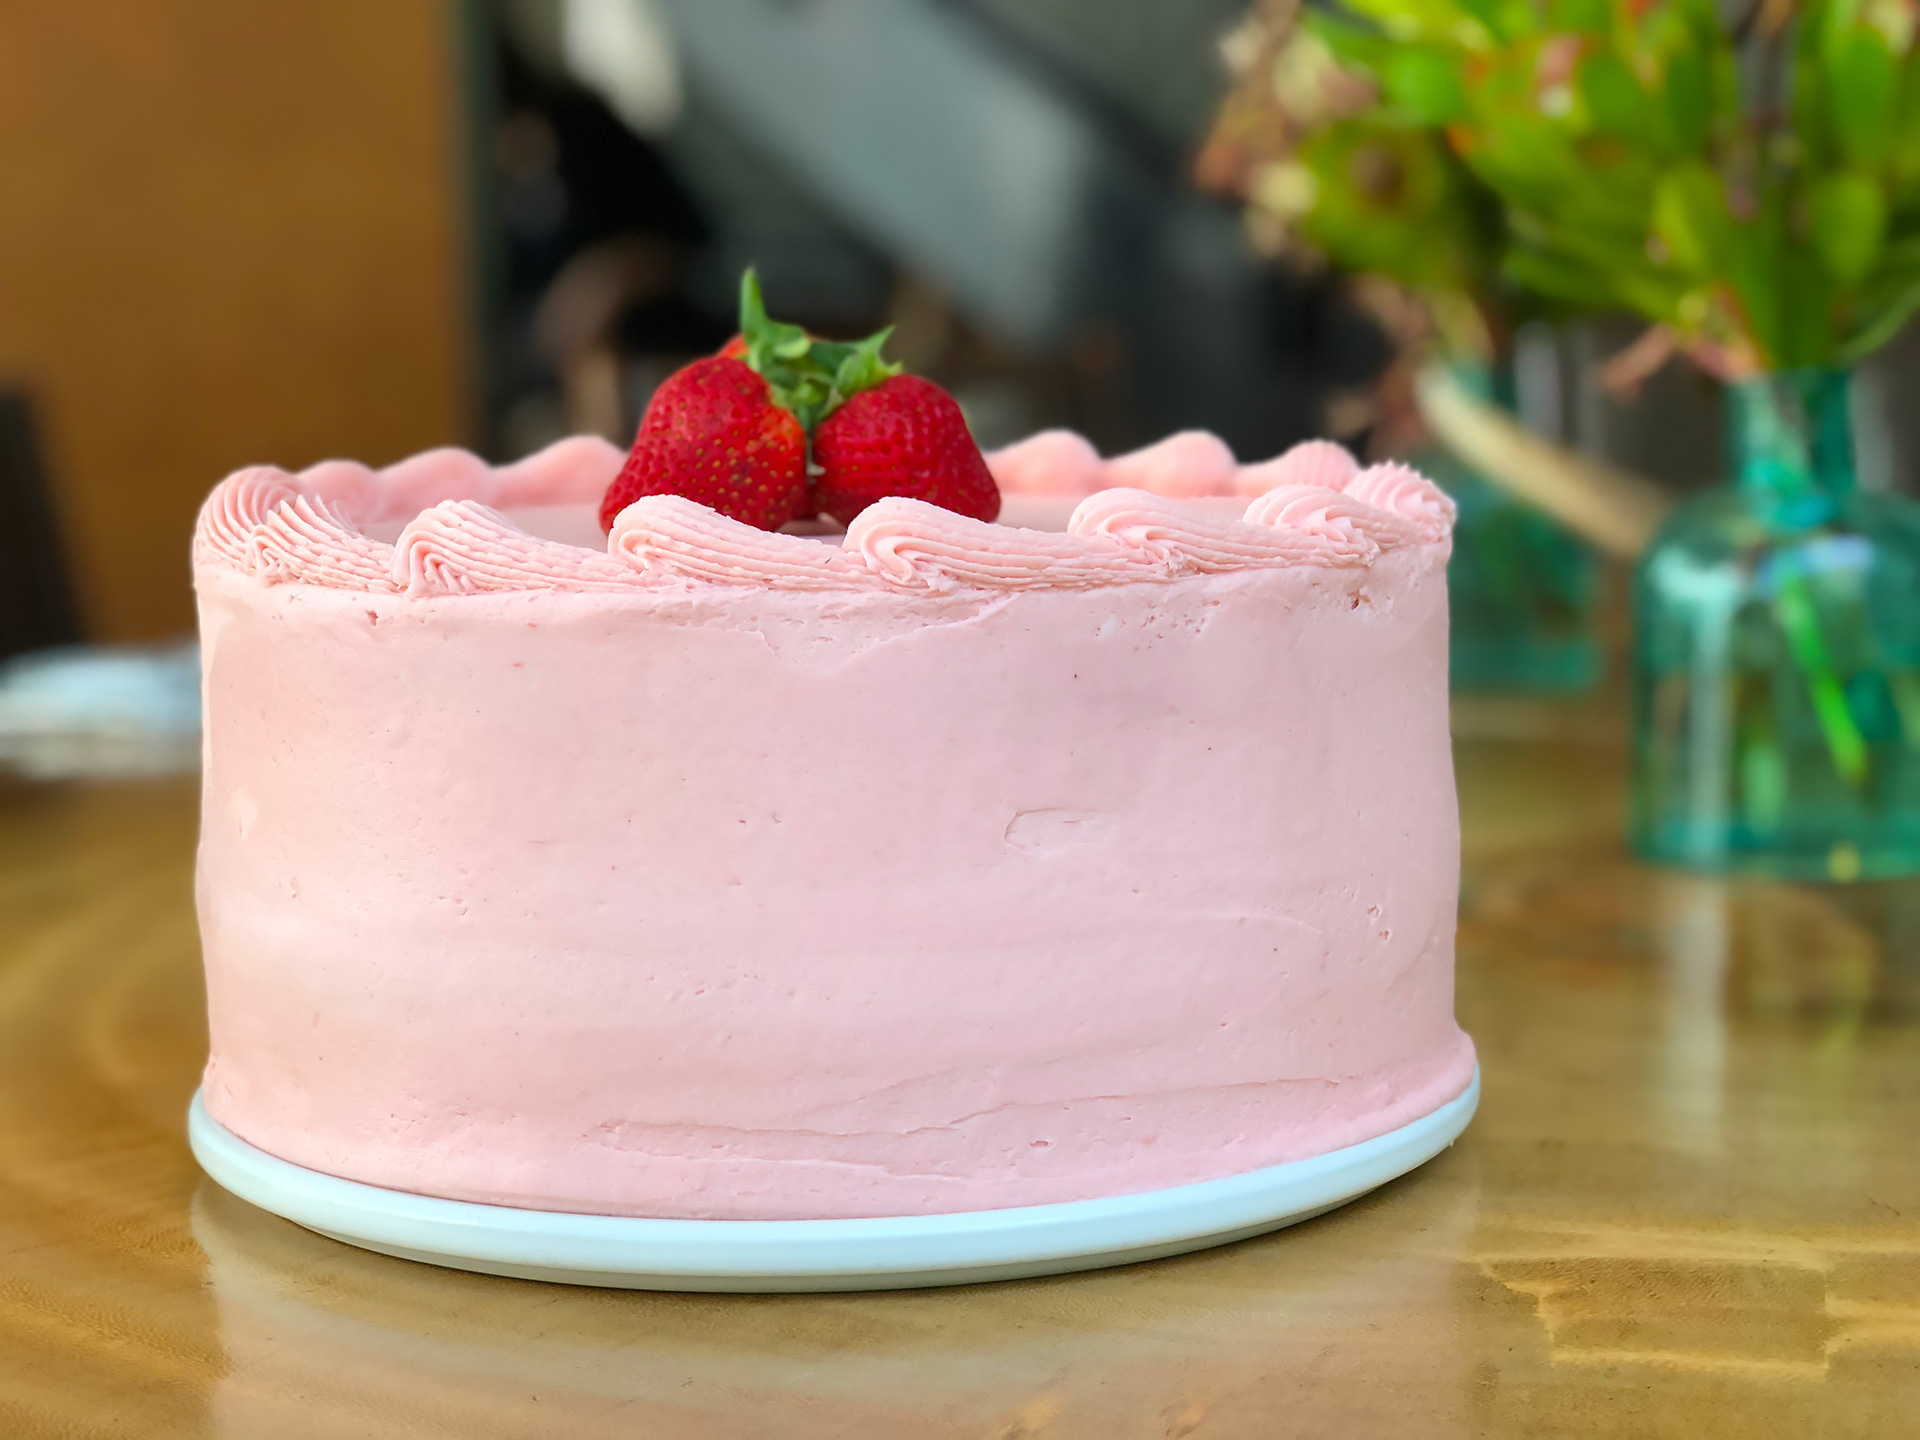 Enjoy the Strawberry Tall Cake at Bluestem Brasserie.